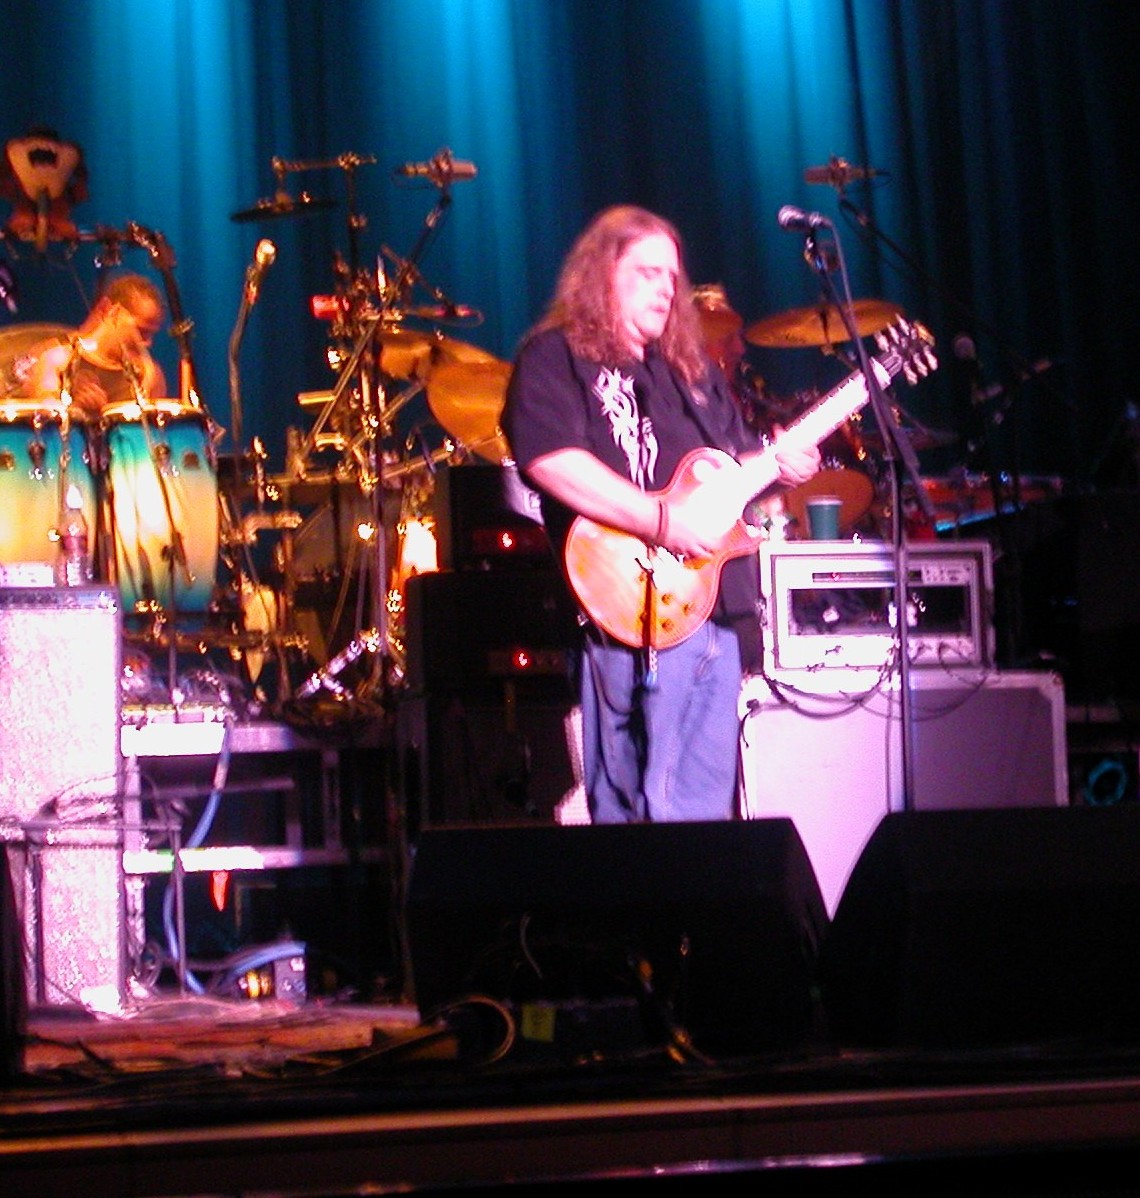 Warren playing at the Tucson, AZ show 9/17/03